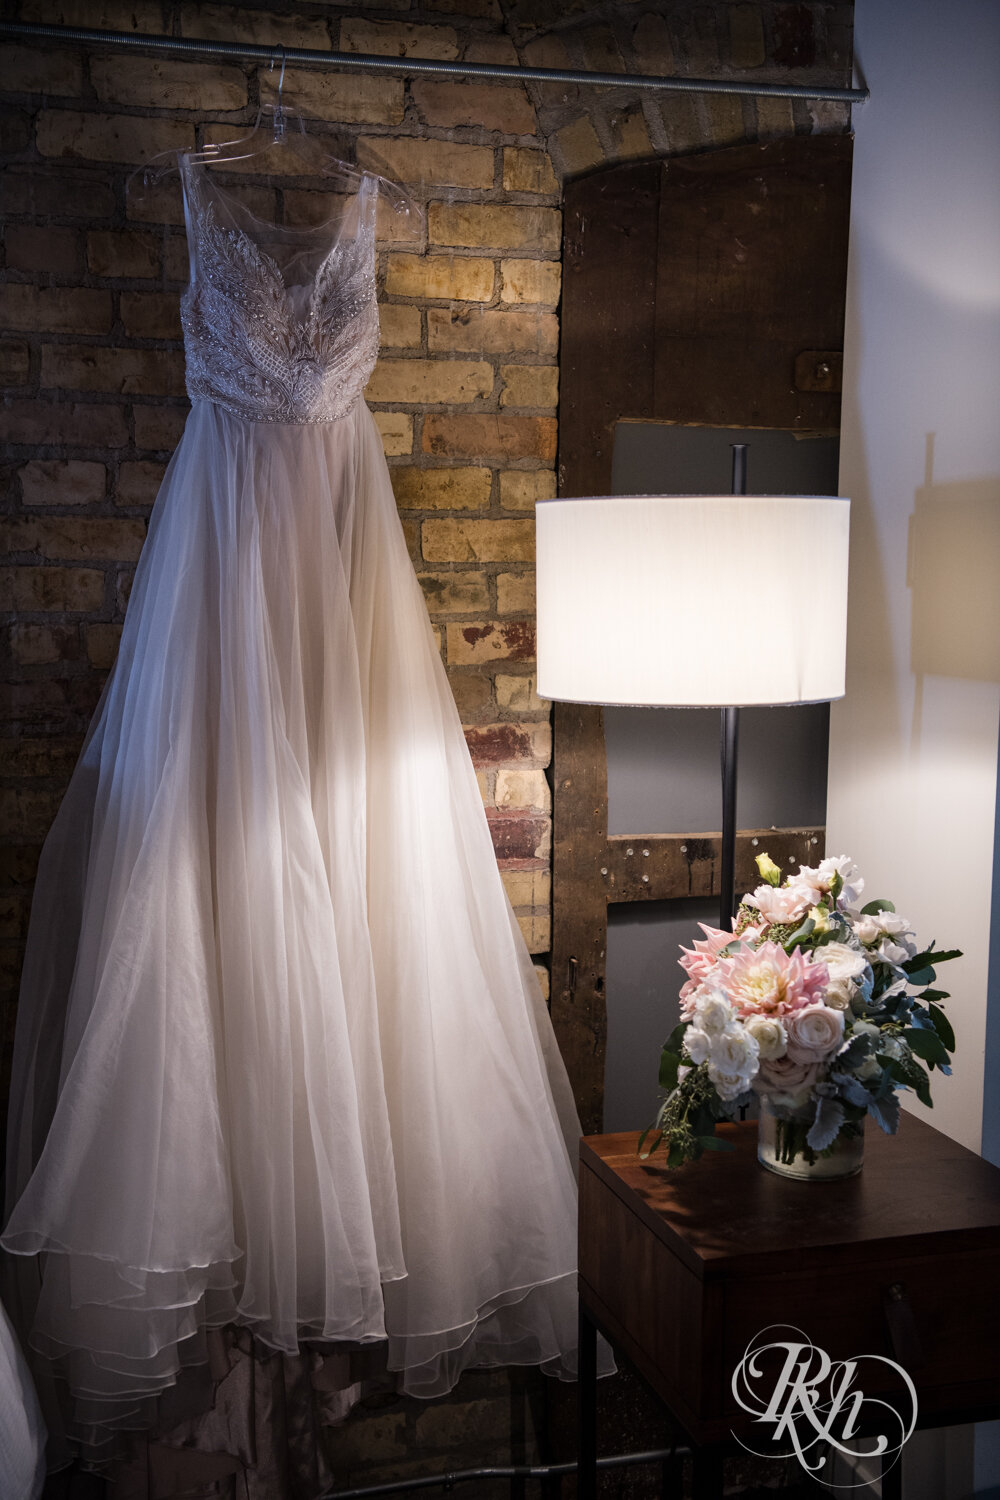 Wedding dress hanging in dramatic lighting at Hewing Hotel in Minneapolis, Minnesota.